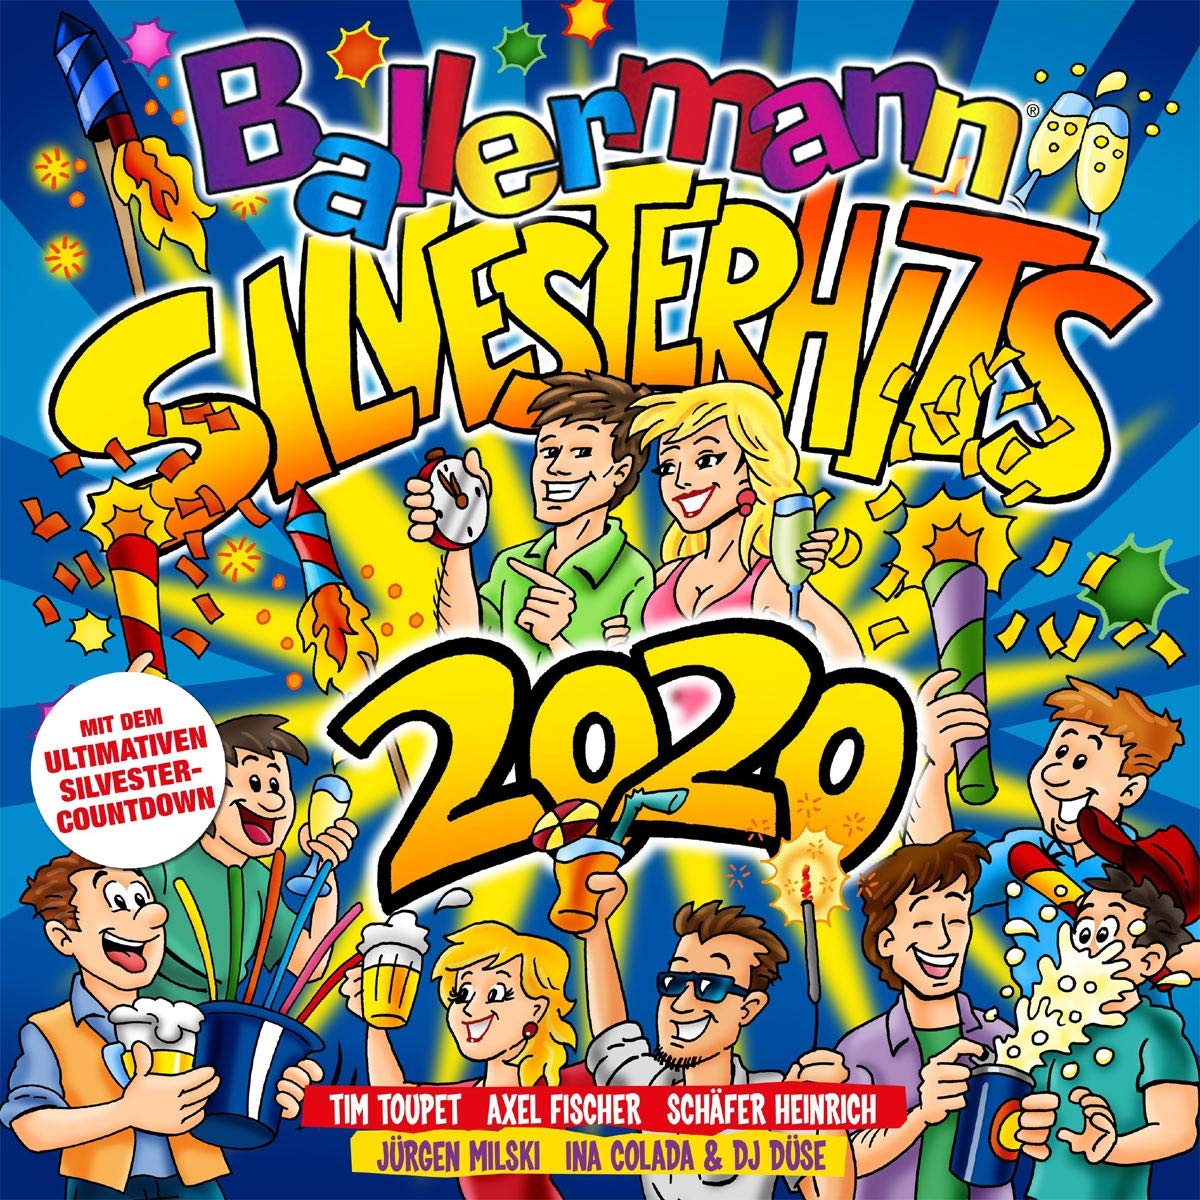 Ballermann Silvesterhits 2020